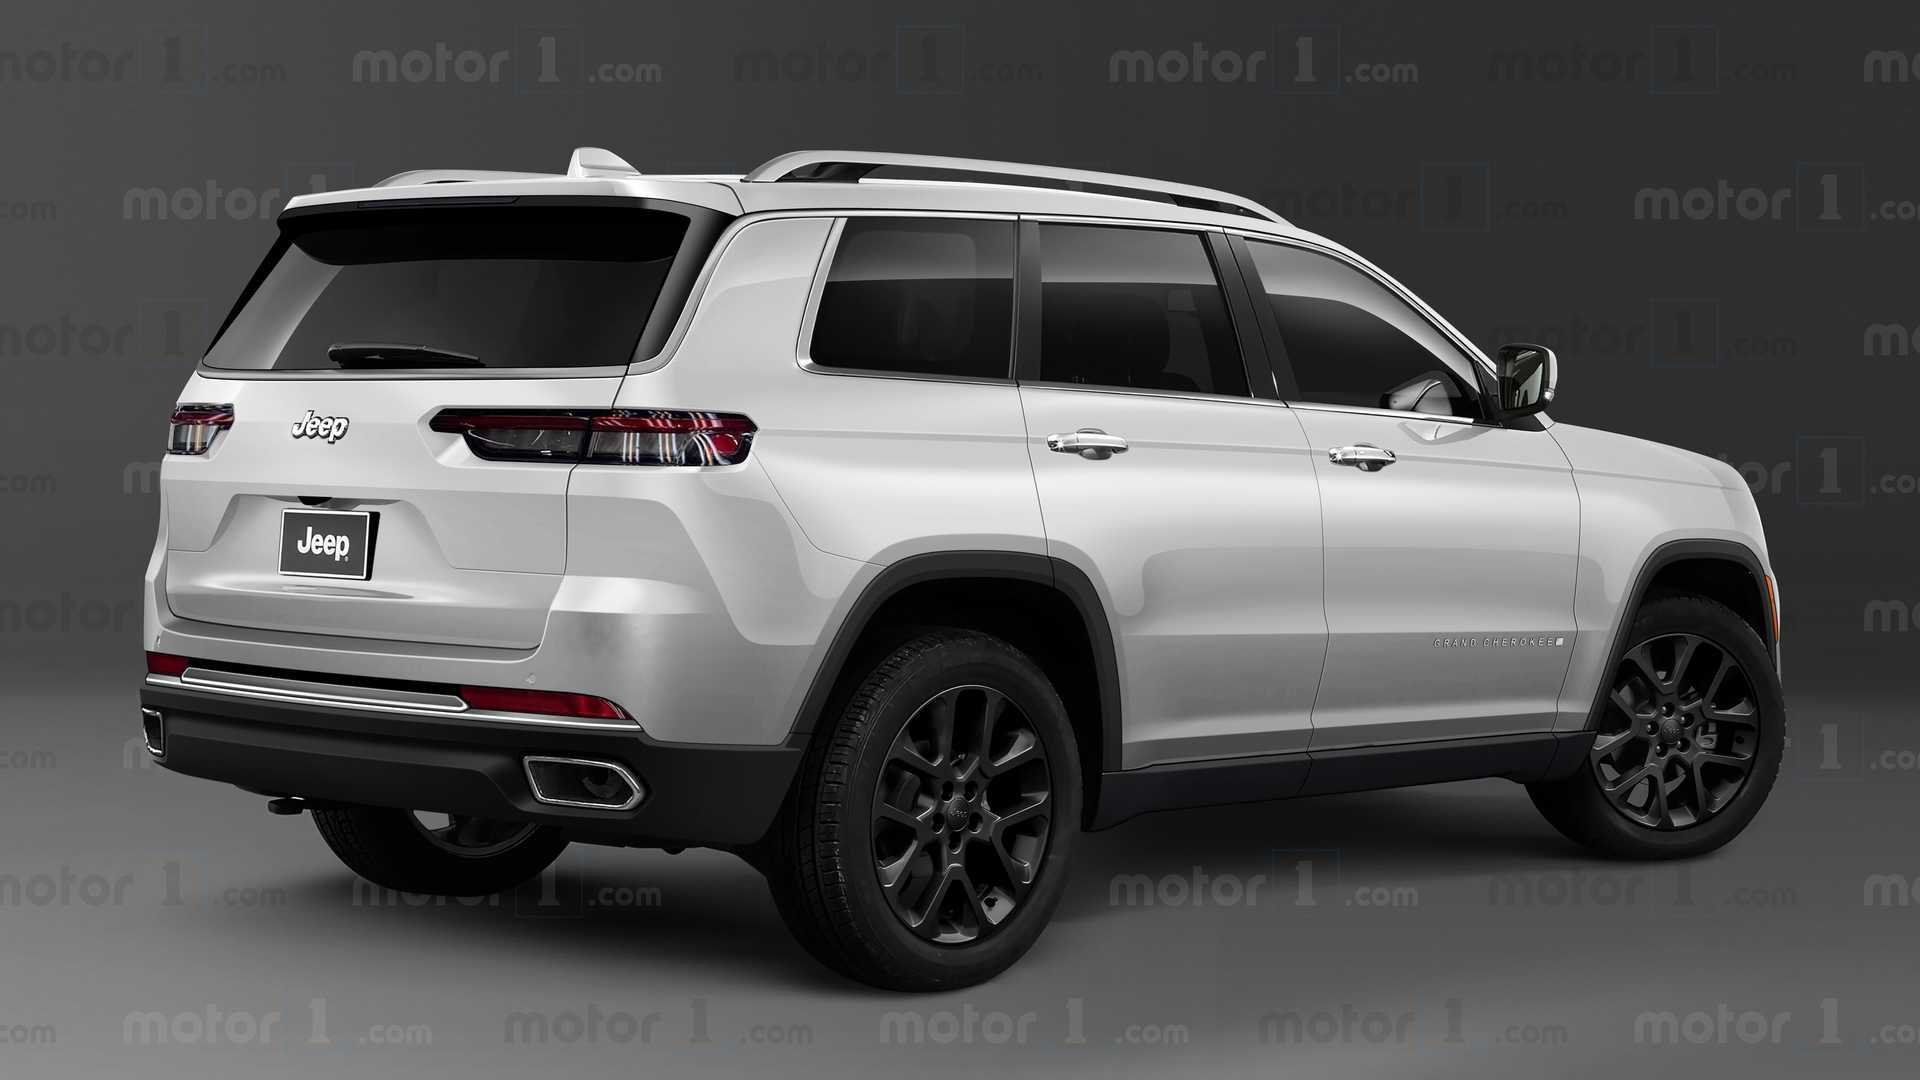 2022-jeep-grand-cherokee-white-rendering-rear.jpg